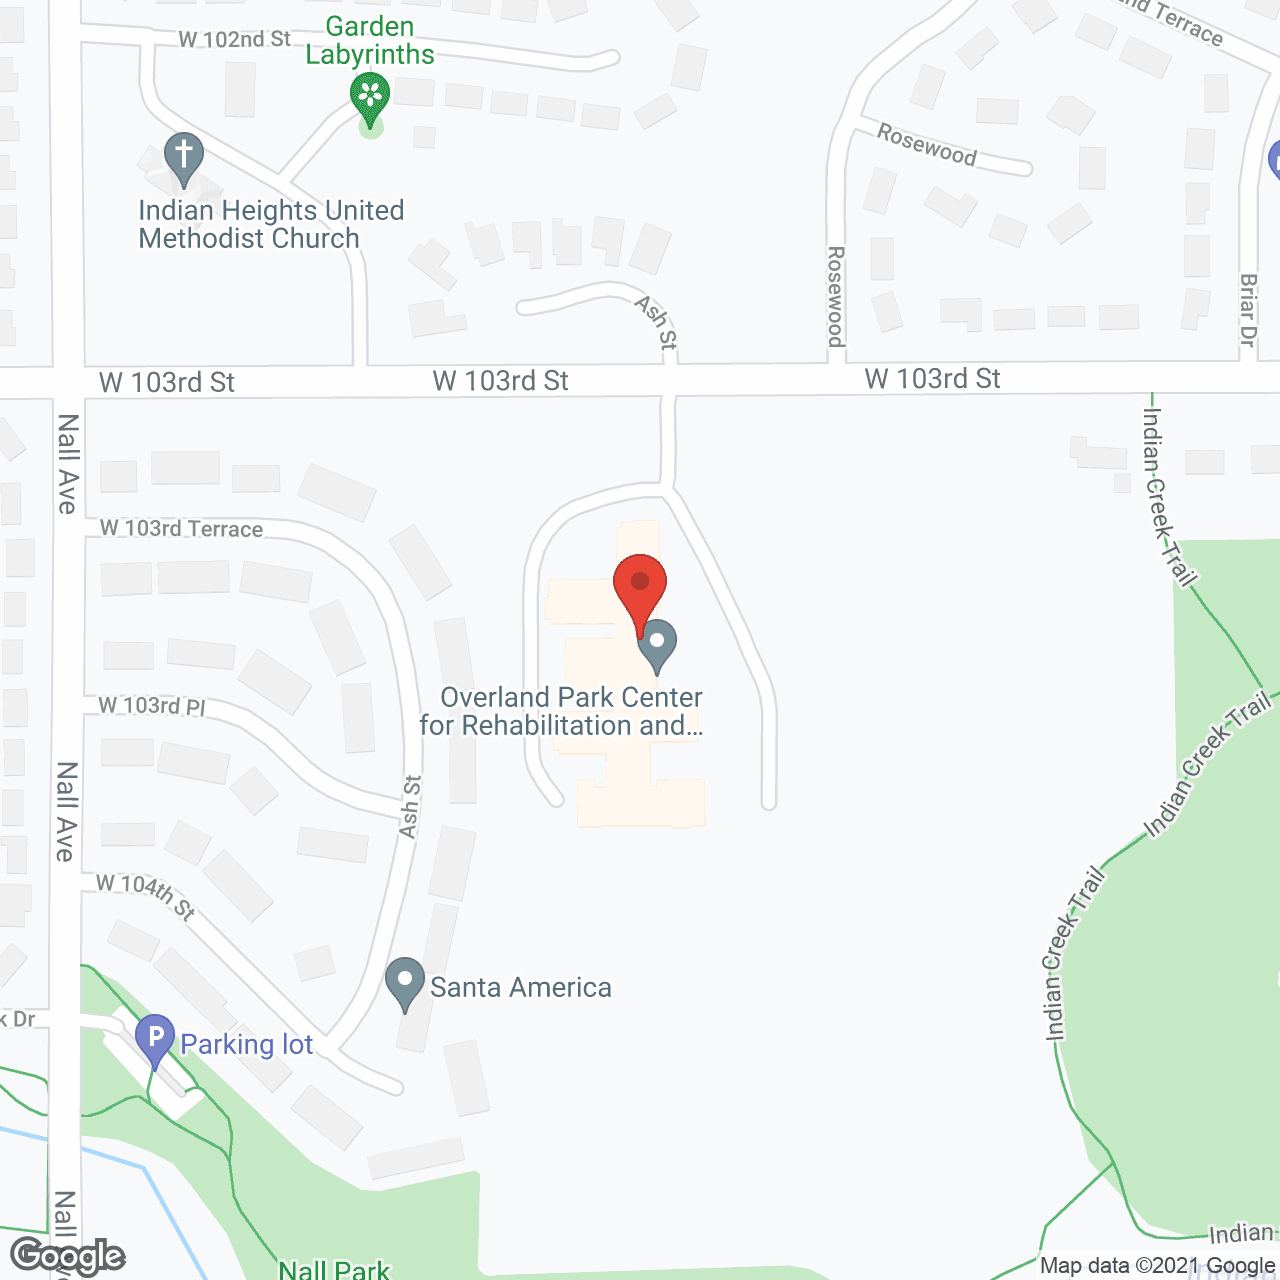 Overland Park Center for Rehabilitation and Nursing in google map